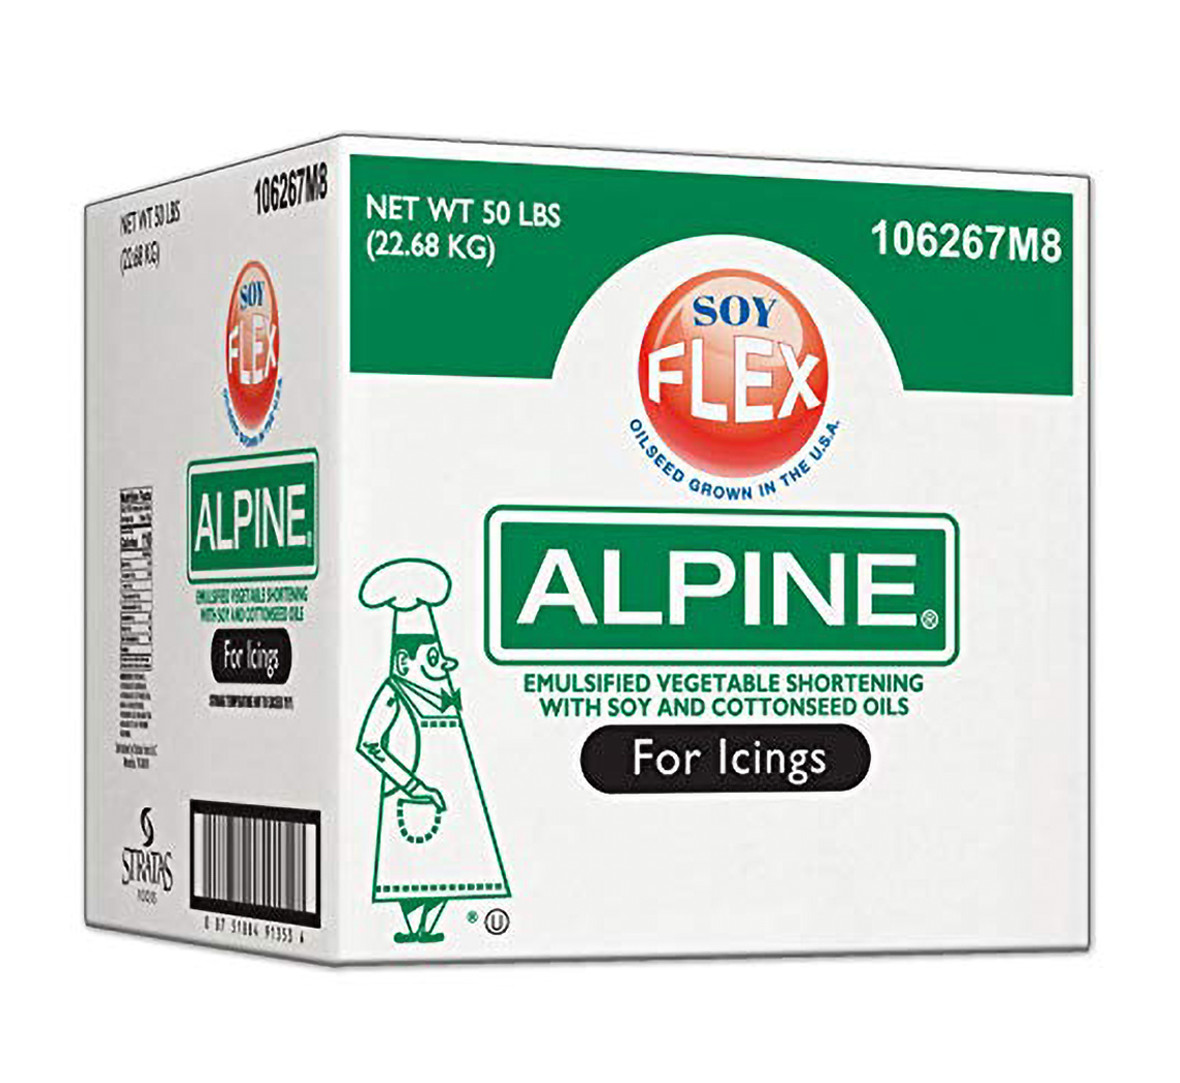 Alpine Soy Flex Emulsified Vegetable Shortening for Icings